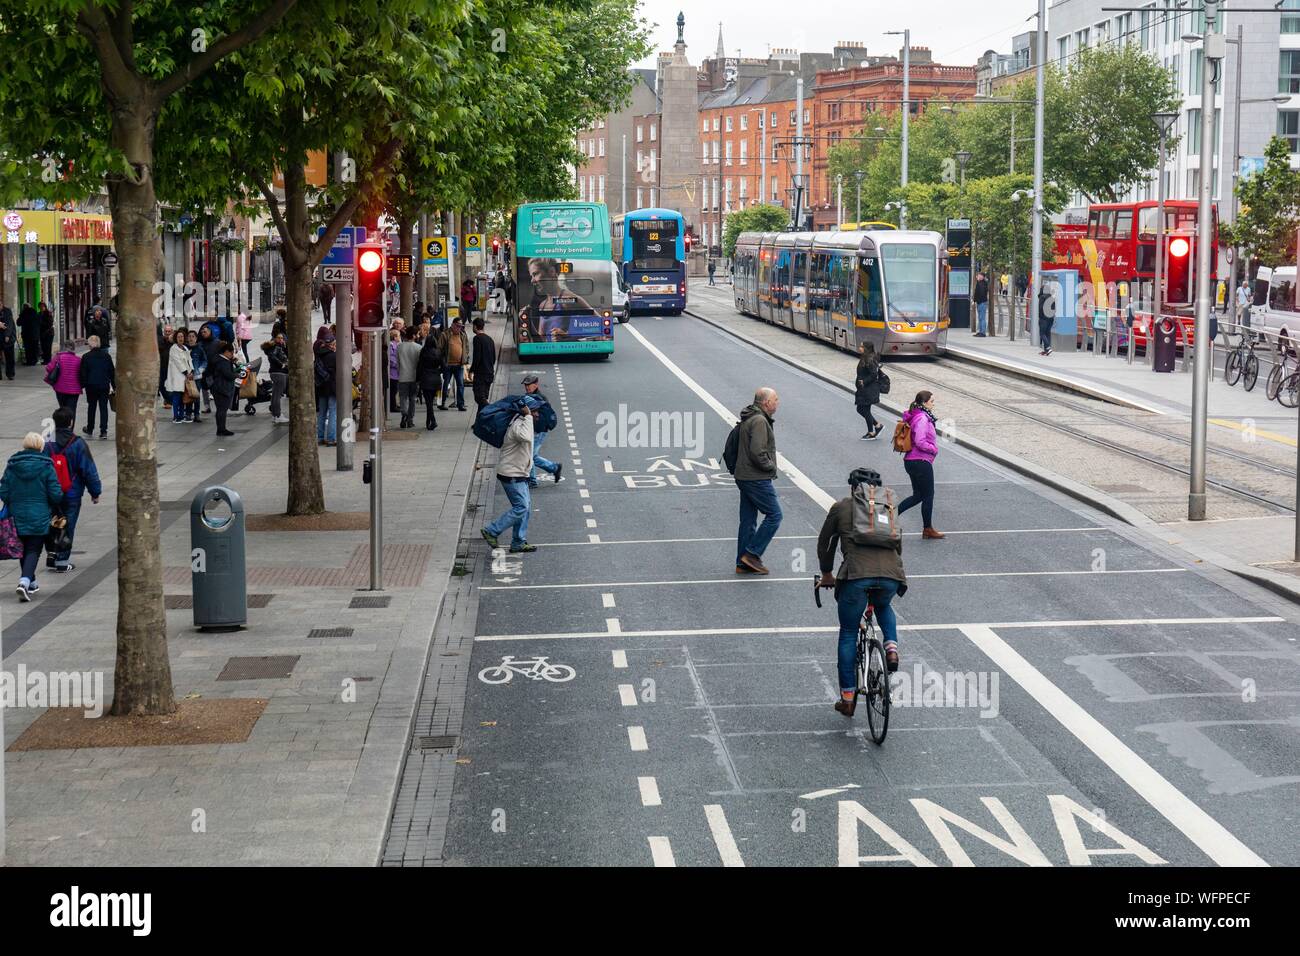 Ireland, Dublin, O'Connell Street, public transport, bus, tram Stock Photo